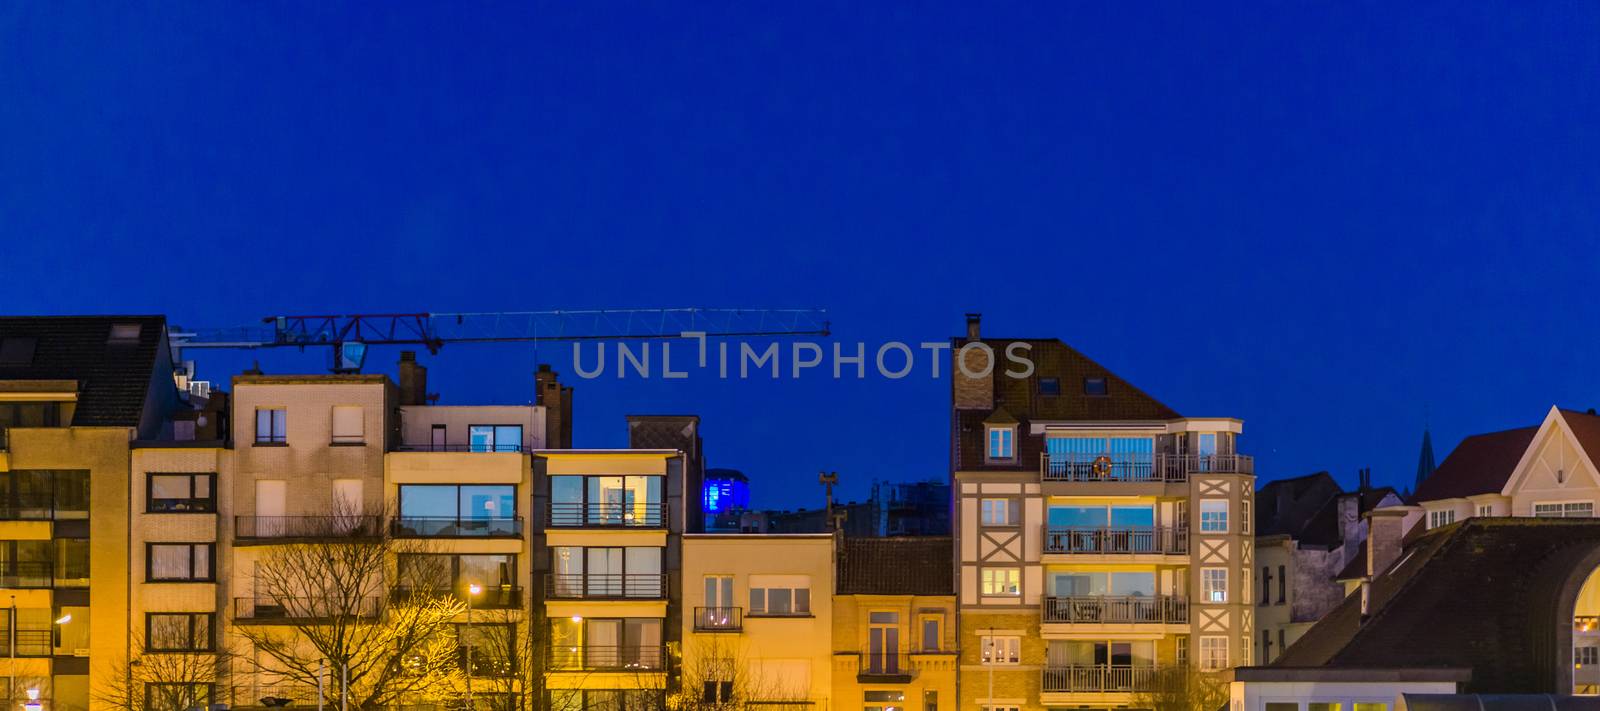 city apartments by night, Belgian architecture of Blankenberge, Belgium by charlottebleijenberg